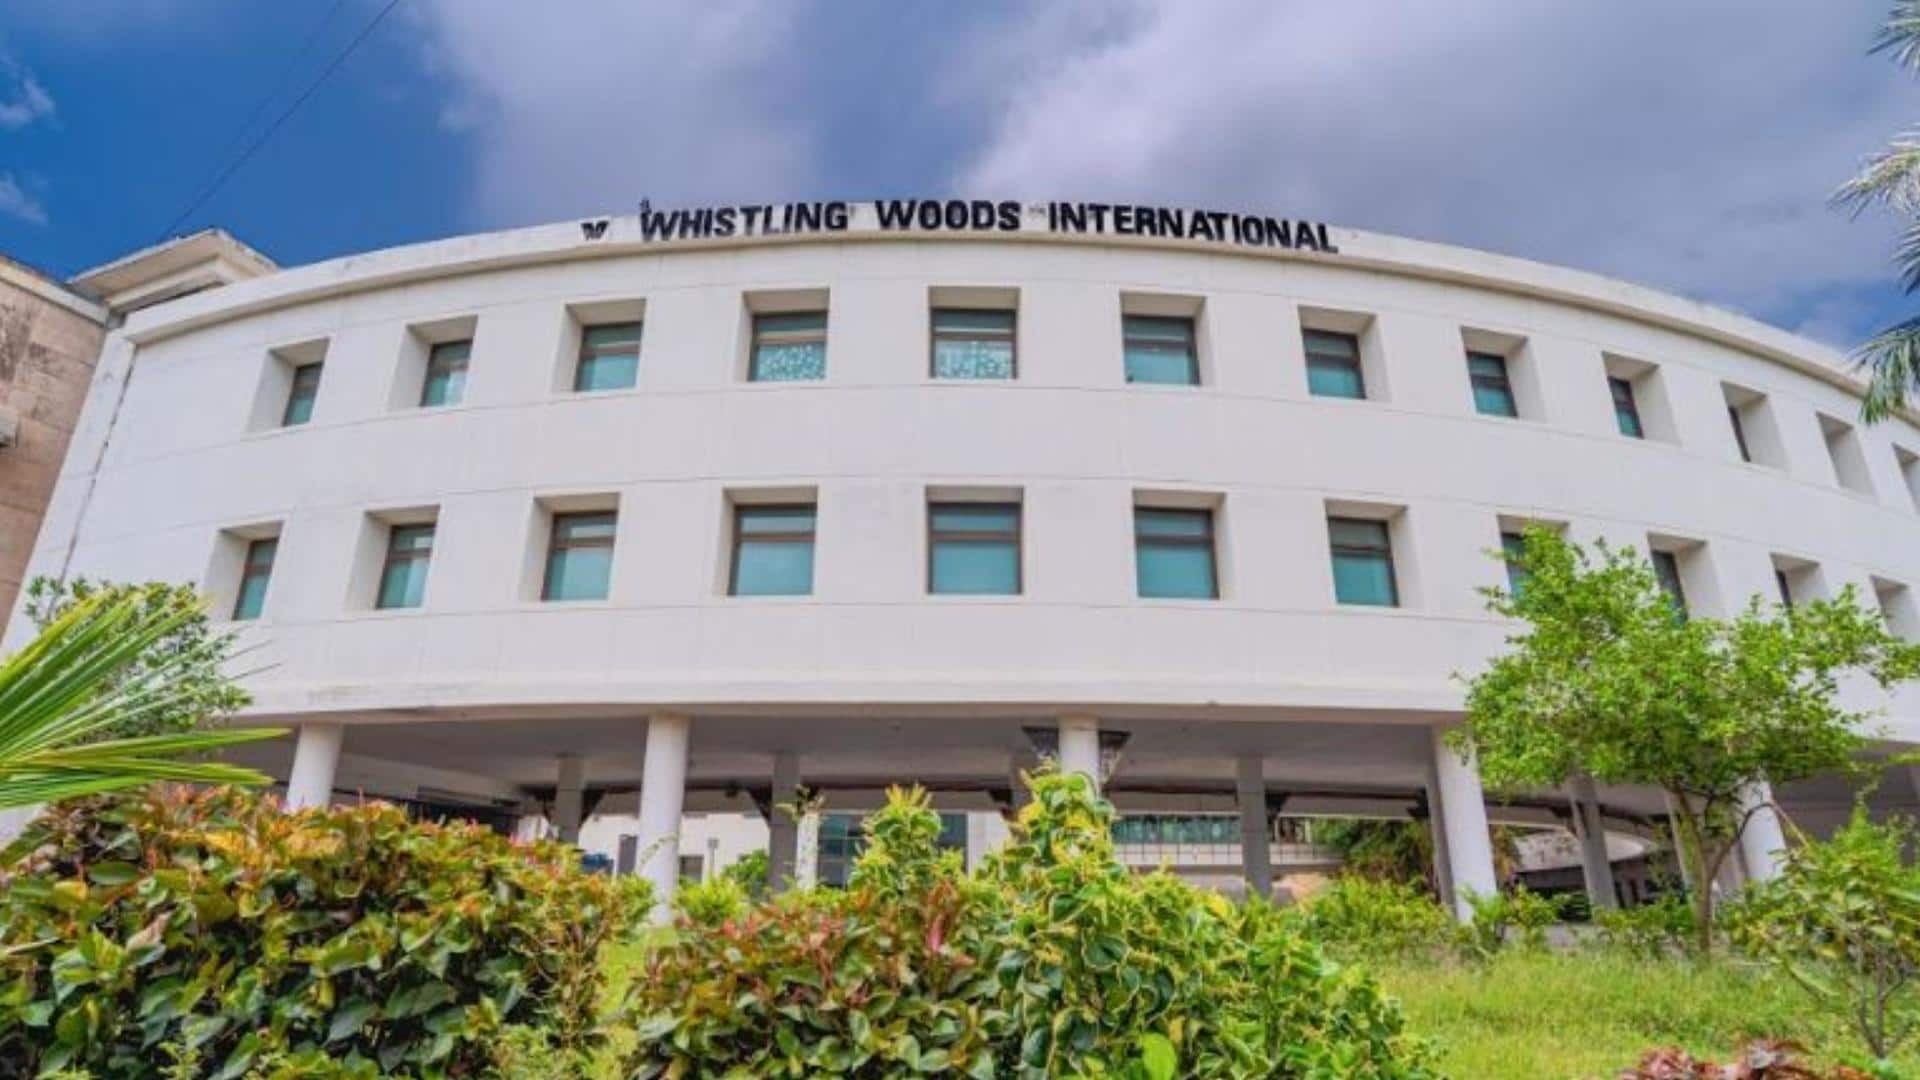 #NewsExplainer: Looking at Whistling Woods International Institute in Mumbai